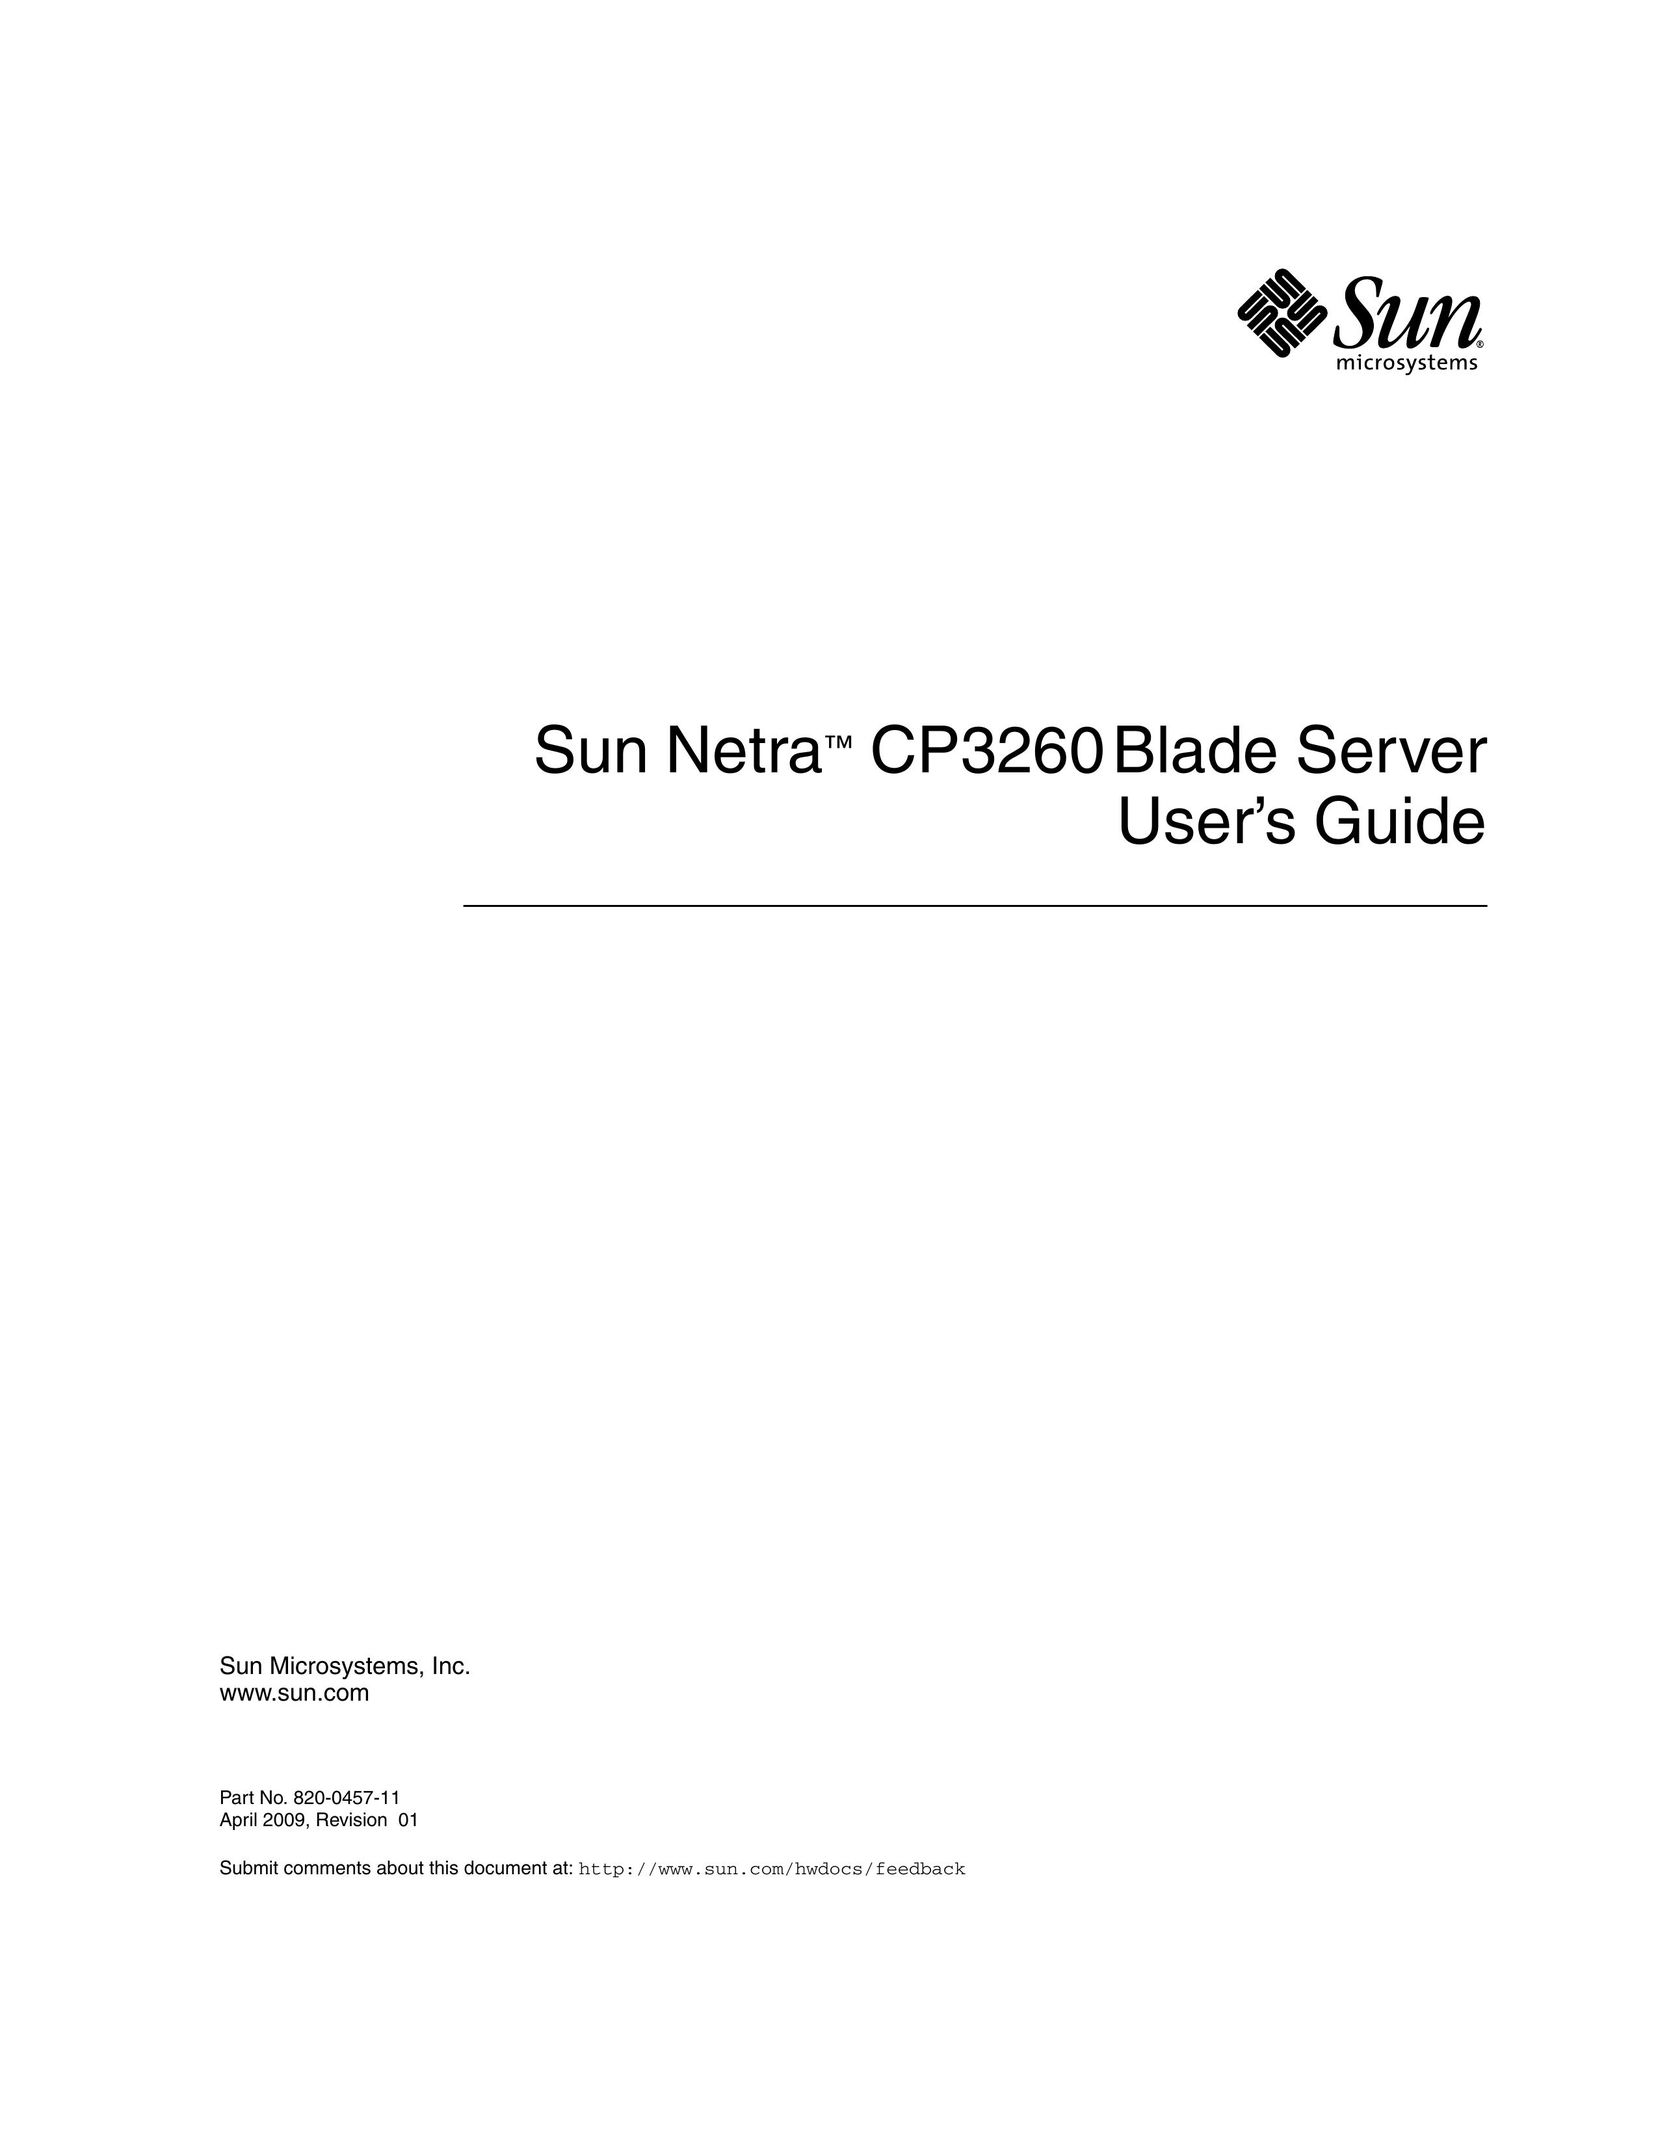 Sun Microsystems CP3260 Server User Manual